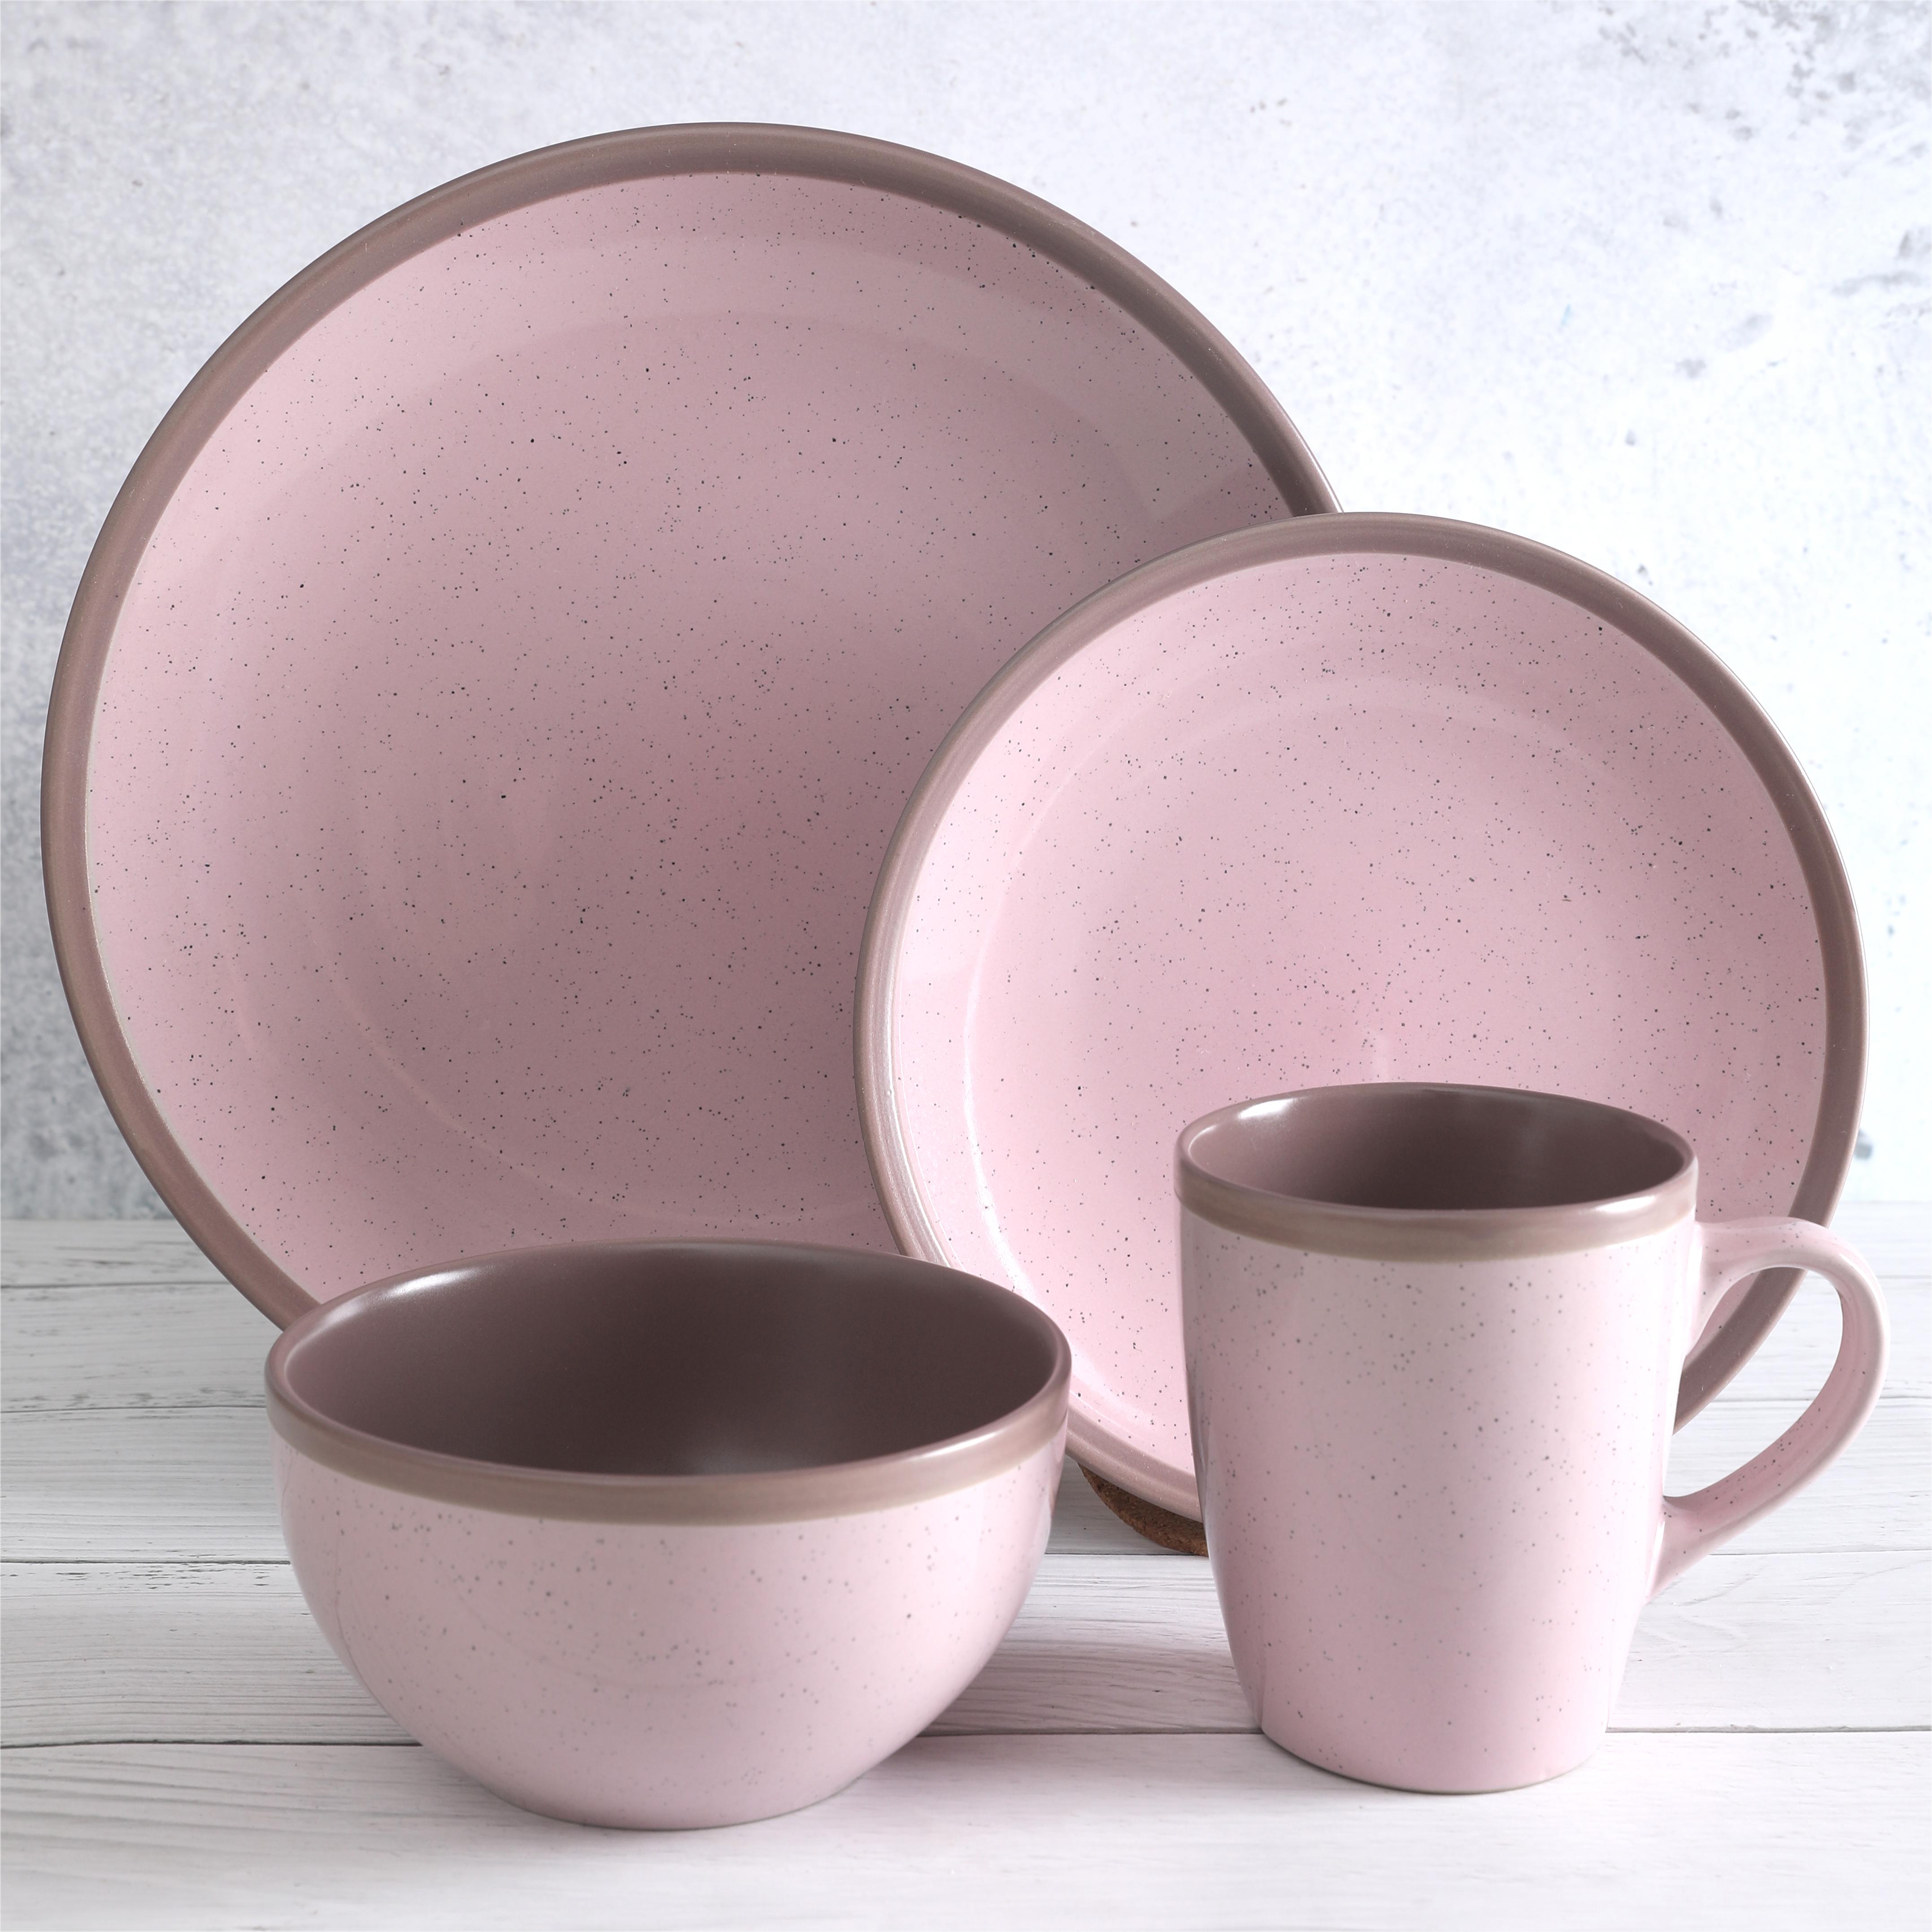 Color Glaze Stoneware With Speckle Glaze Tableware Set